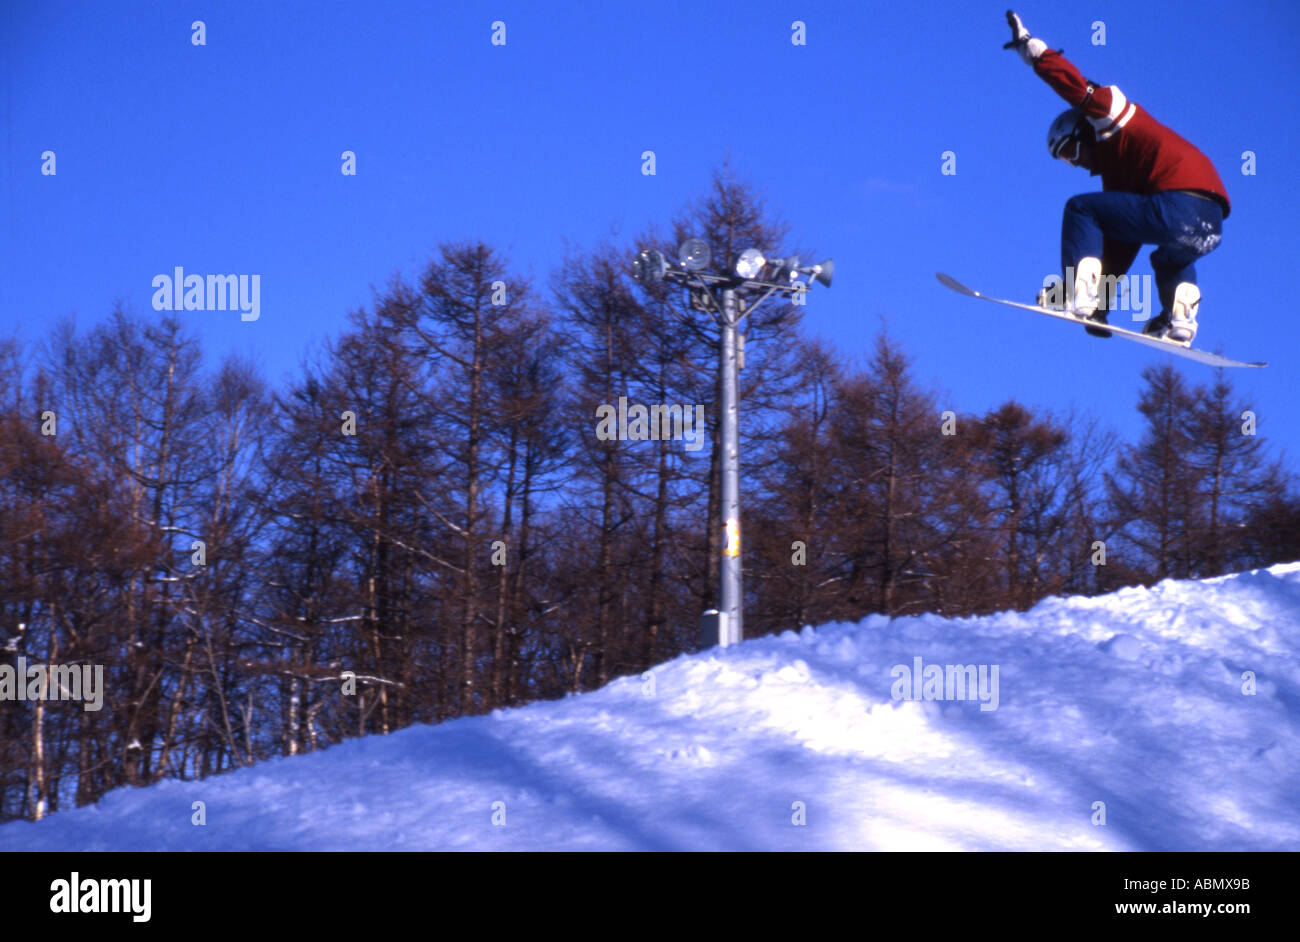 Snowboarder flies through the air in Hokkaido Japan Stock Photo